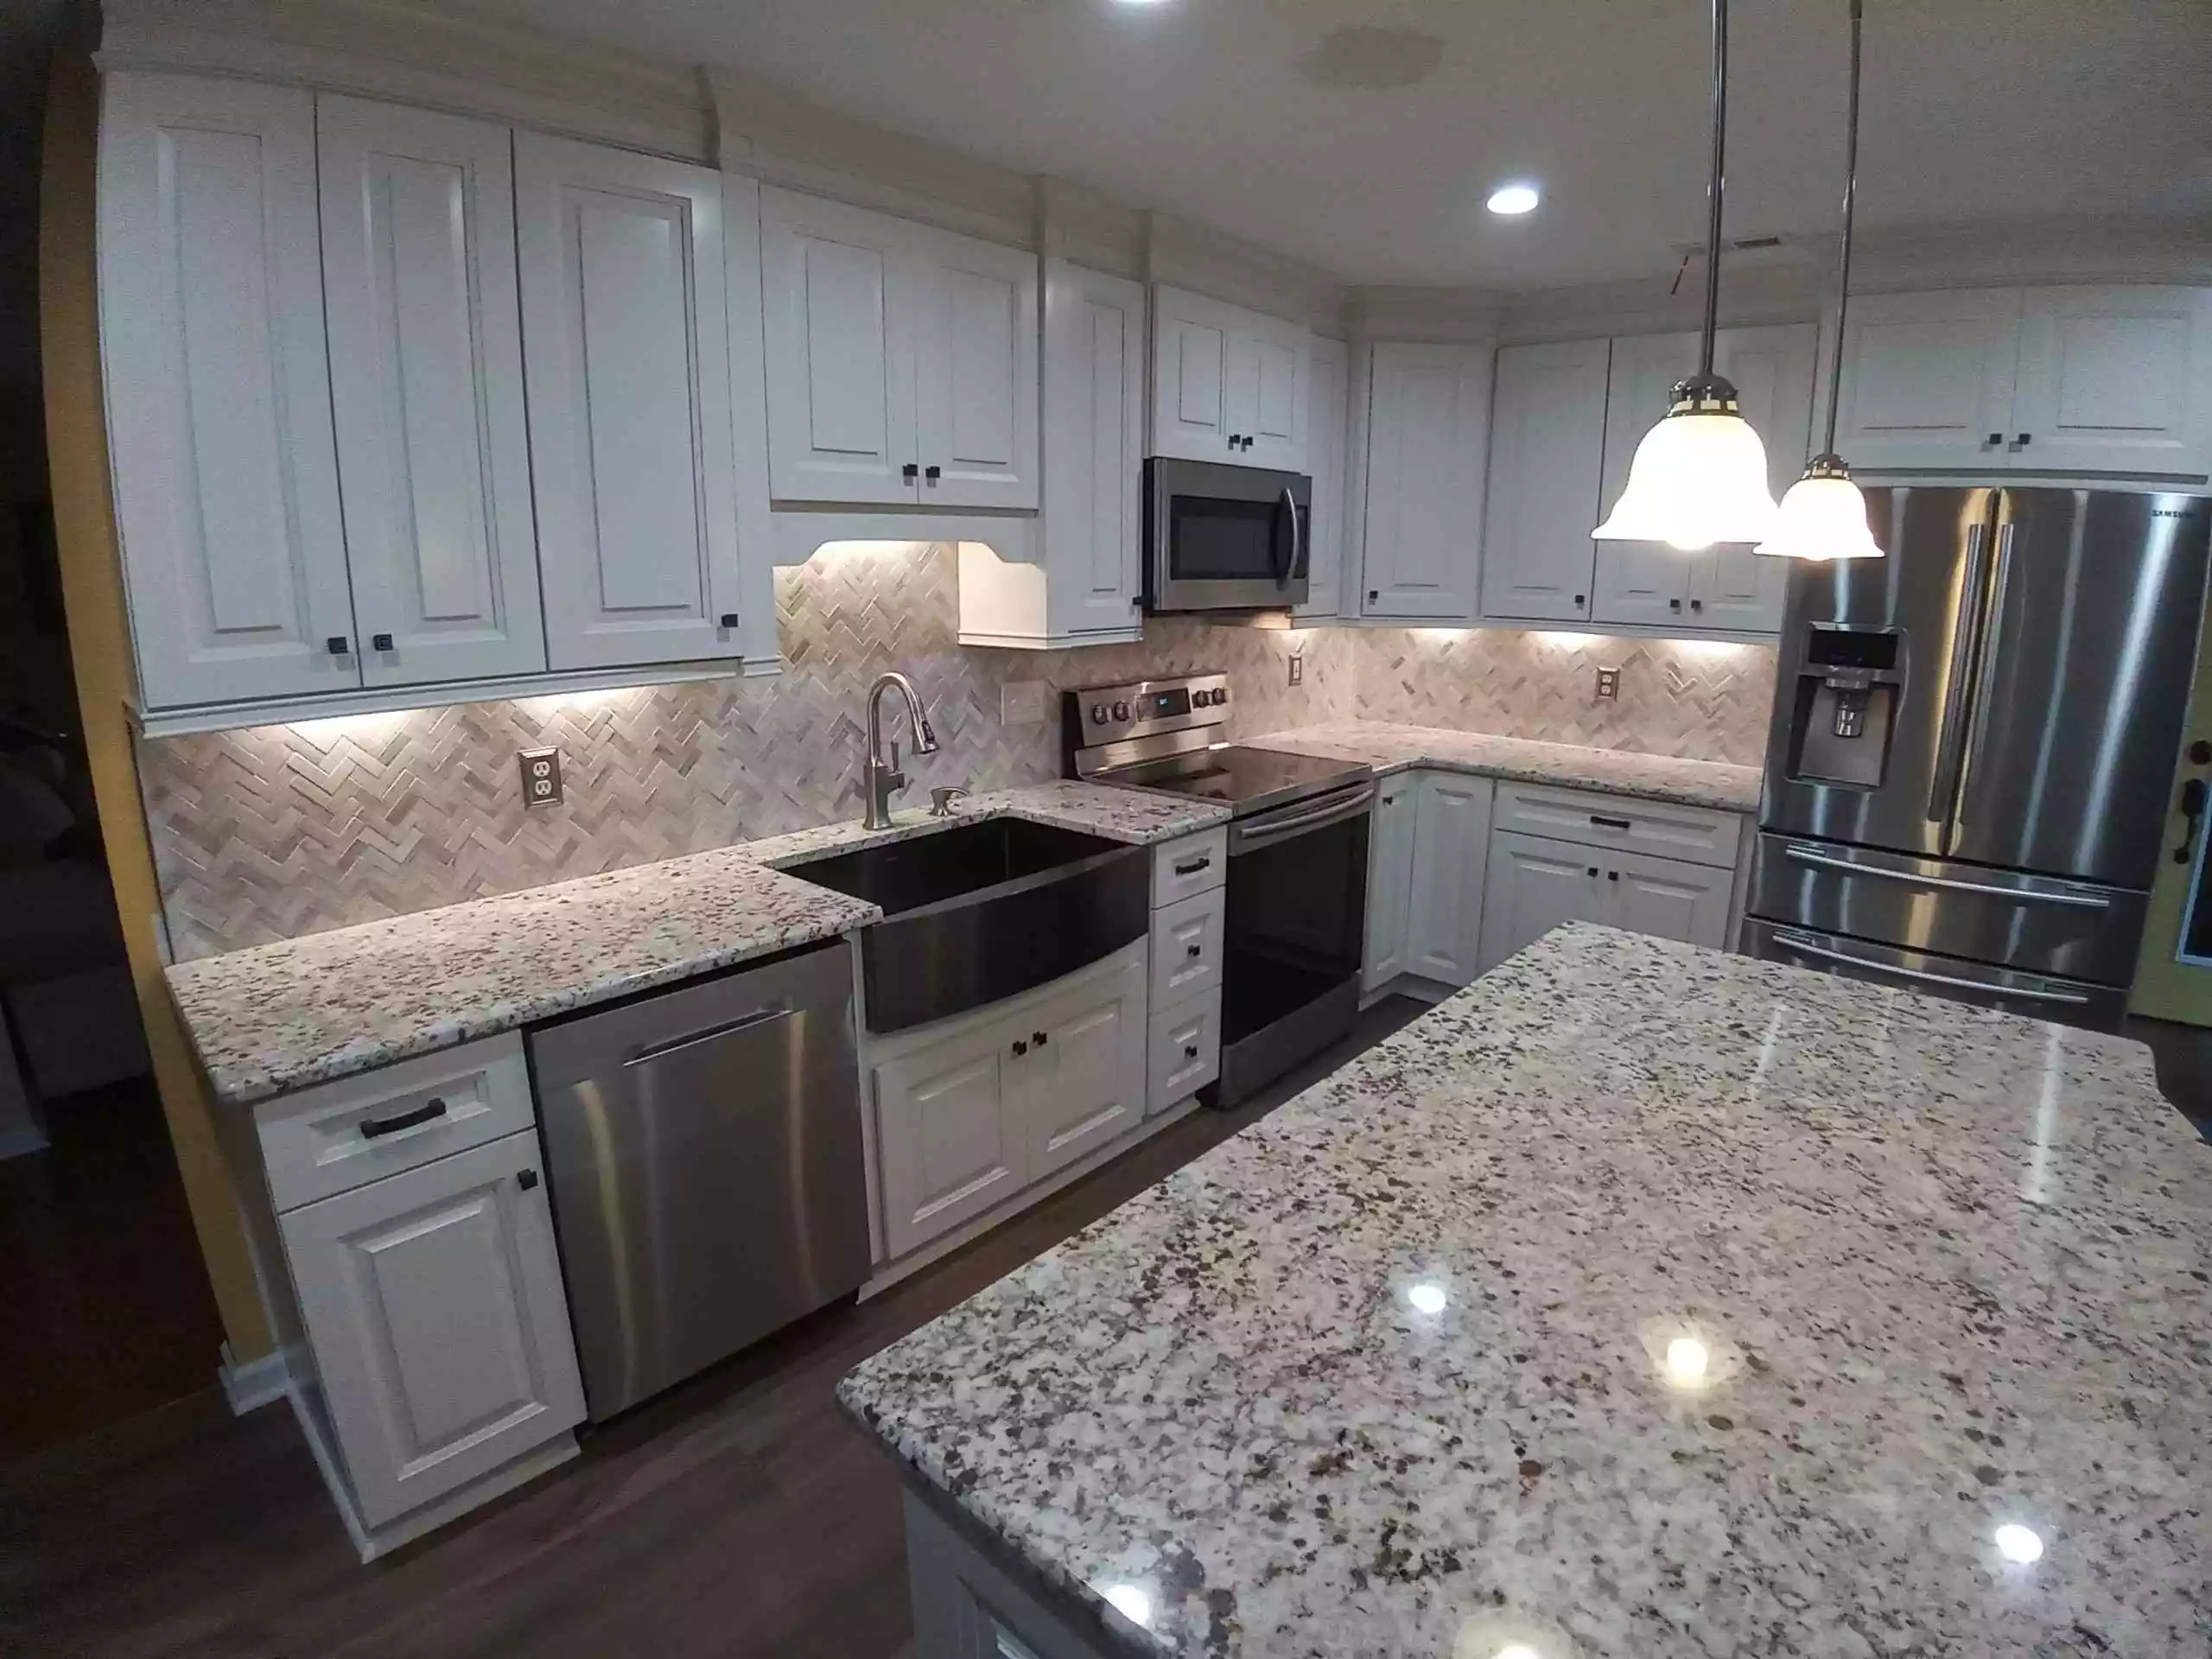 White kitchen cabinets with granite countertops.